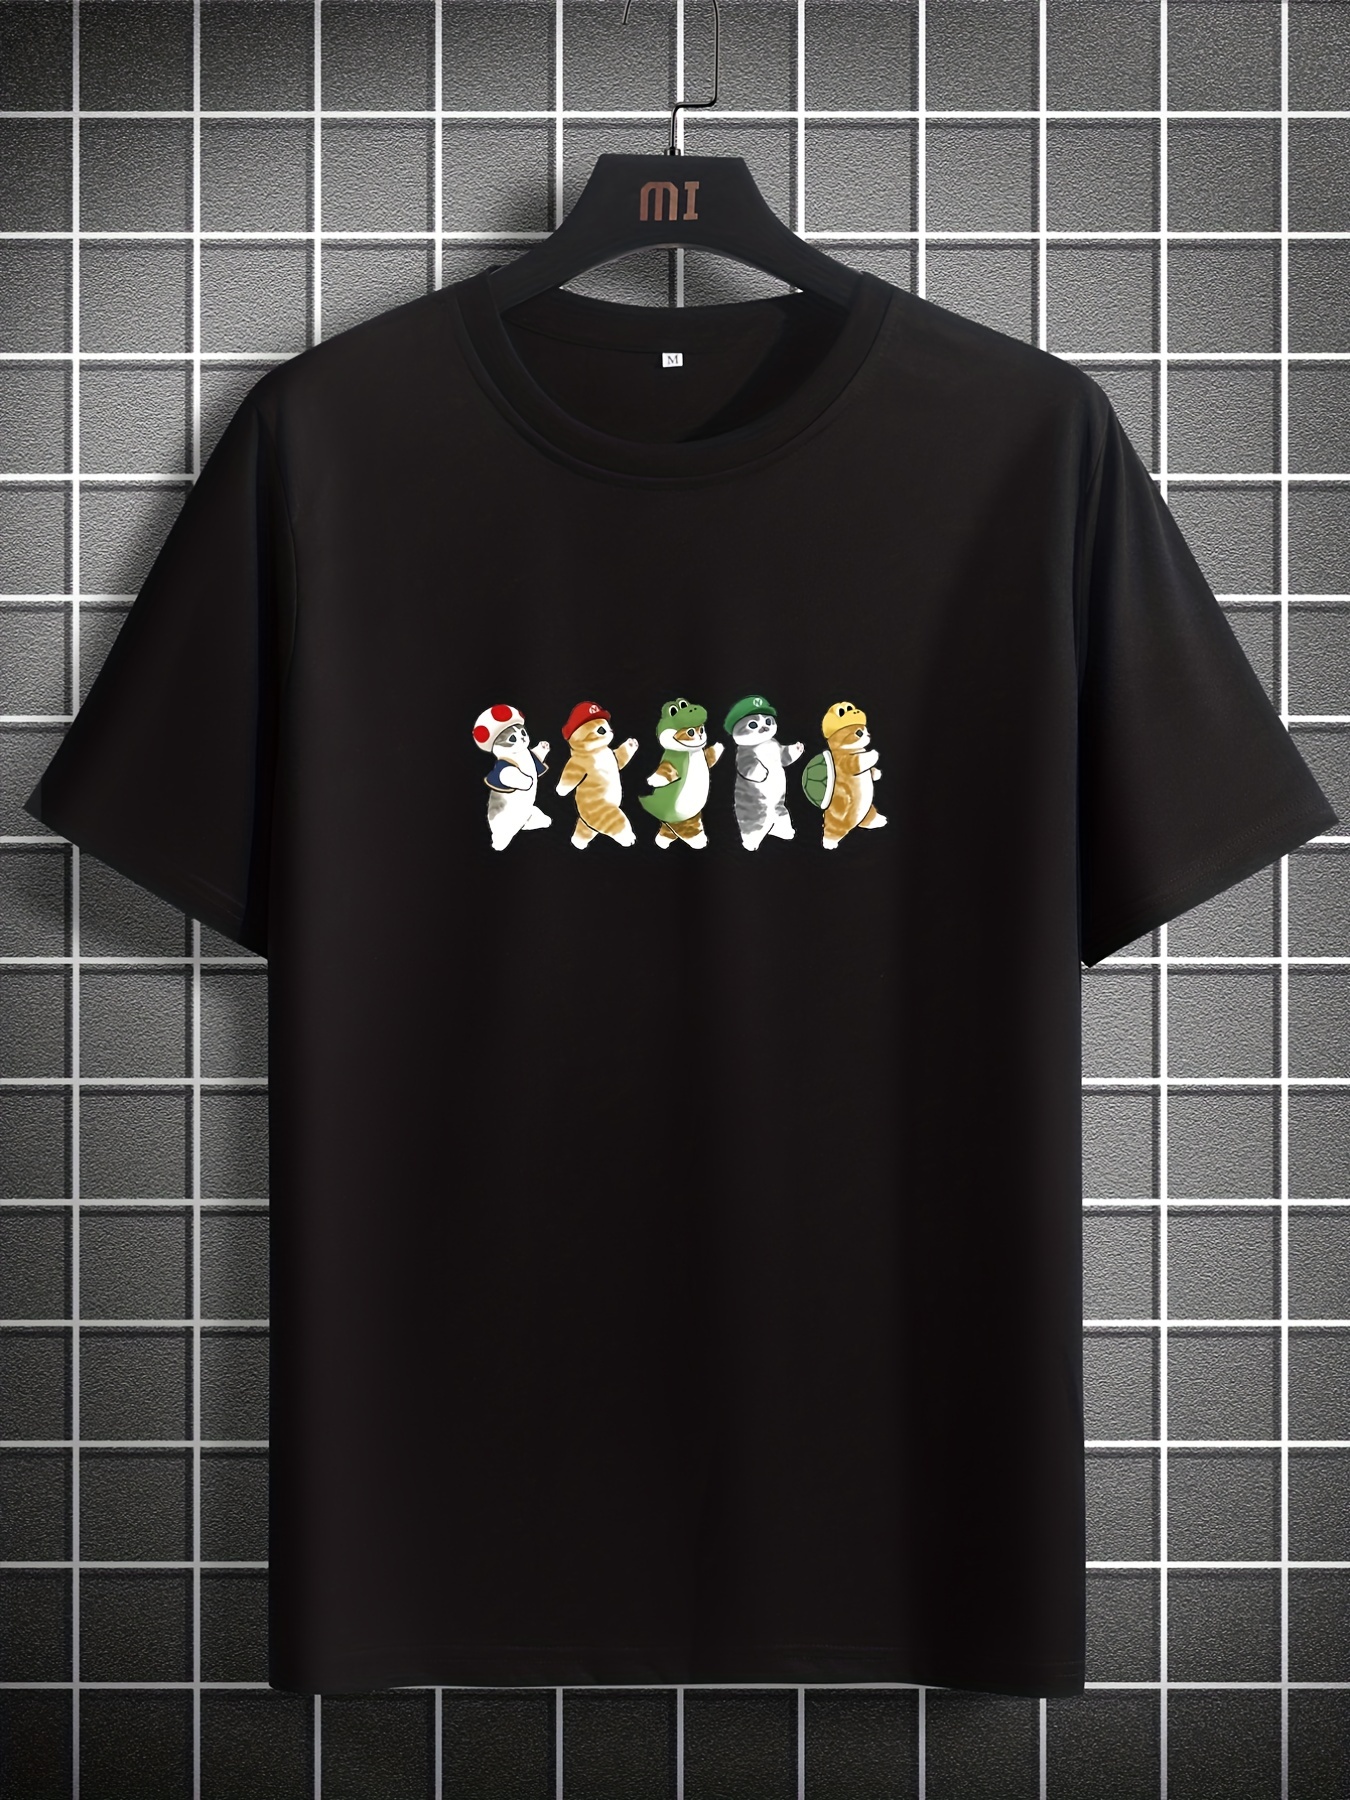 ROBLOX Children's Short Sleeve T-shirt Cotton Summer Children Clothing  Cartoon Cute Casual T-shirt Boys and Girls Sweatshirt